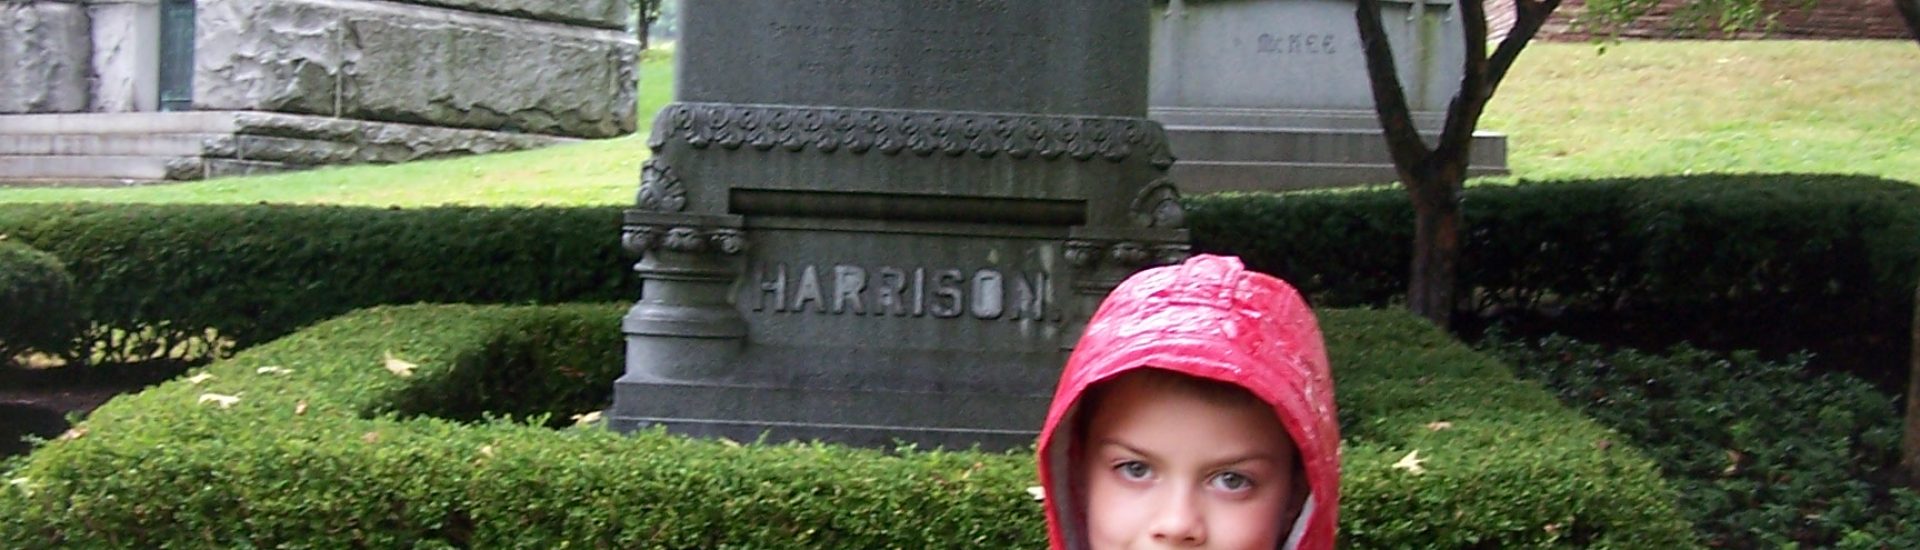 Harrison plot